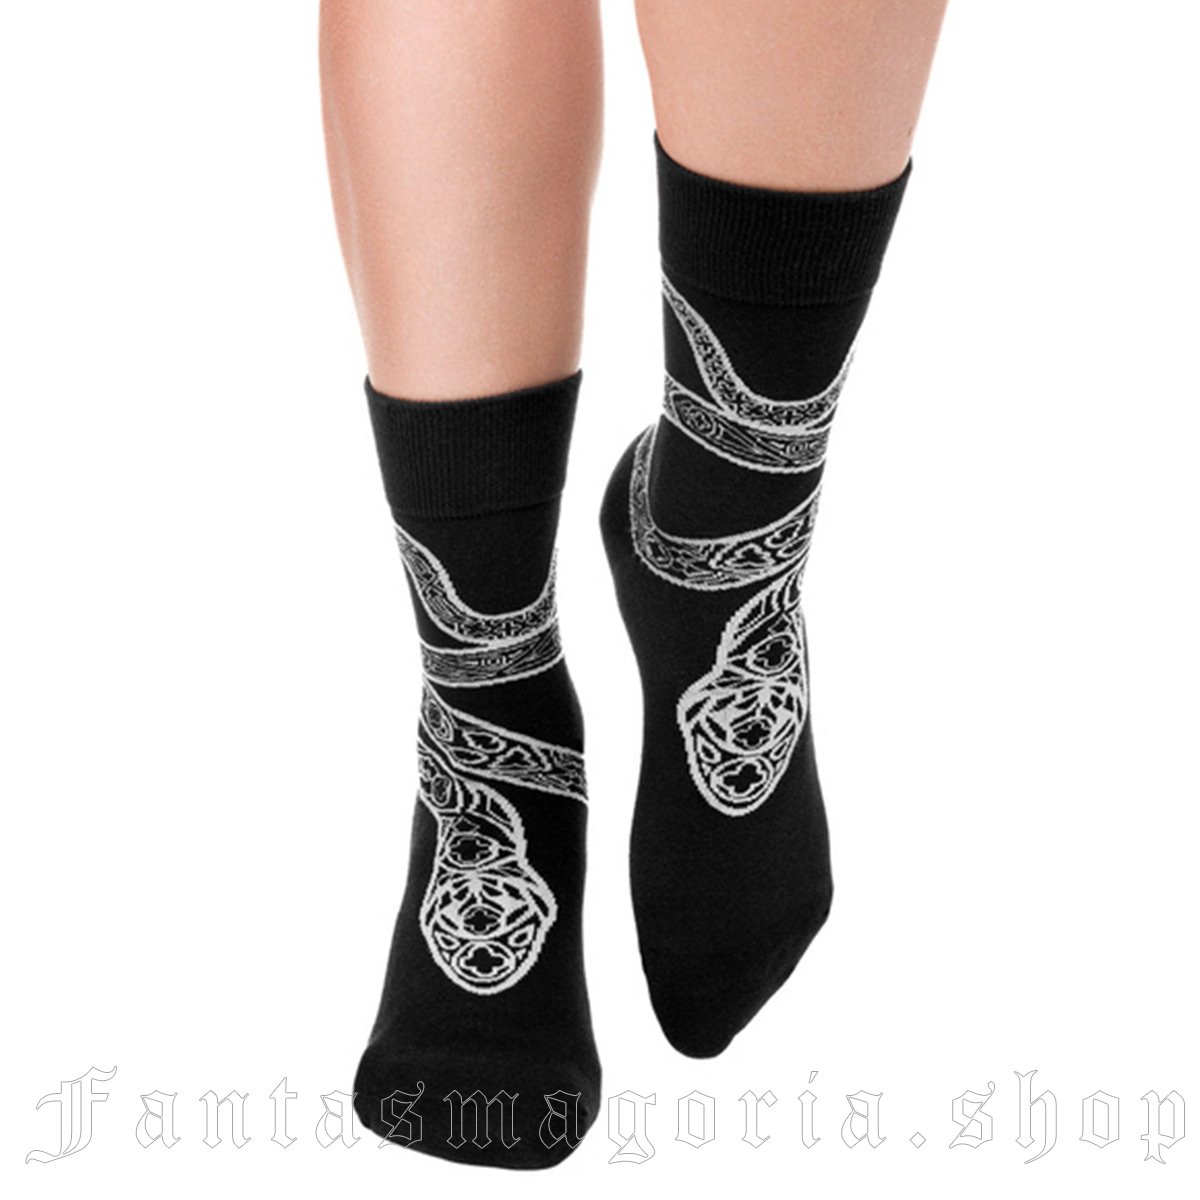 Gothic black jacquard snake motif socks. - Restyle - RES5900949917696